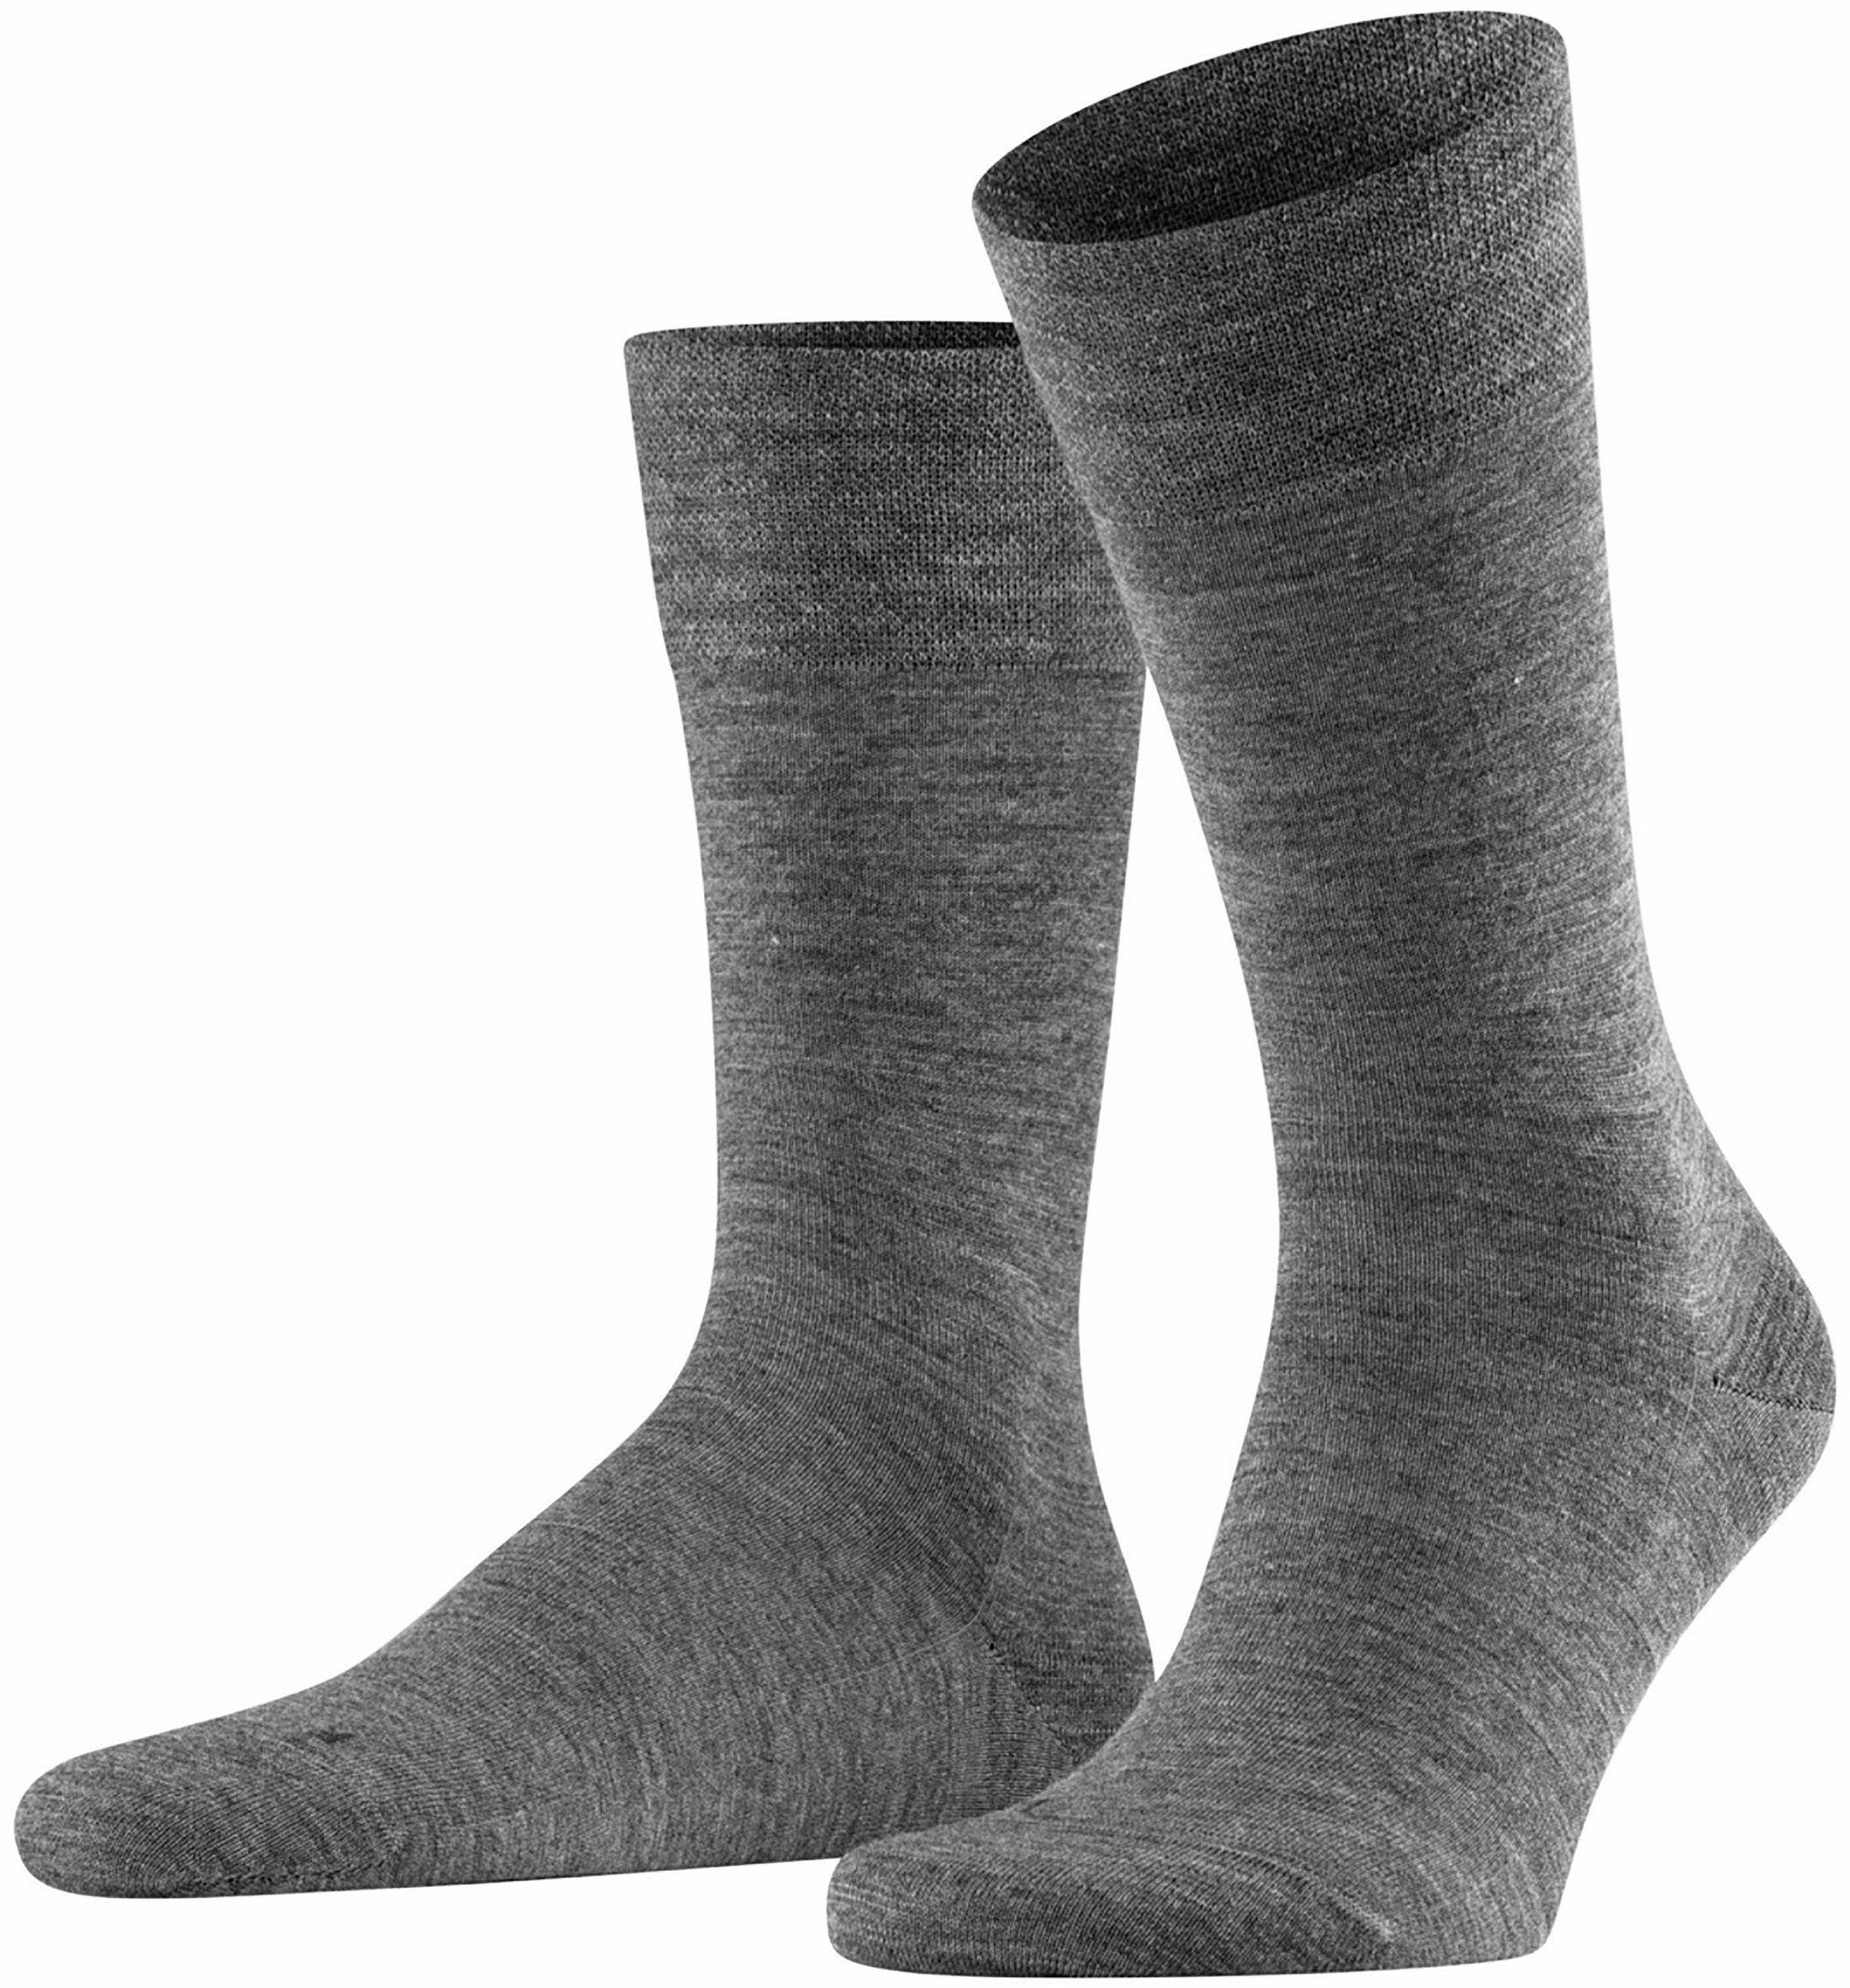 Falke Sensitive Sock Berlin 3070 Grey size 39-42